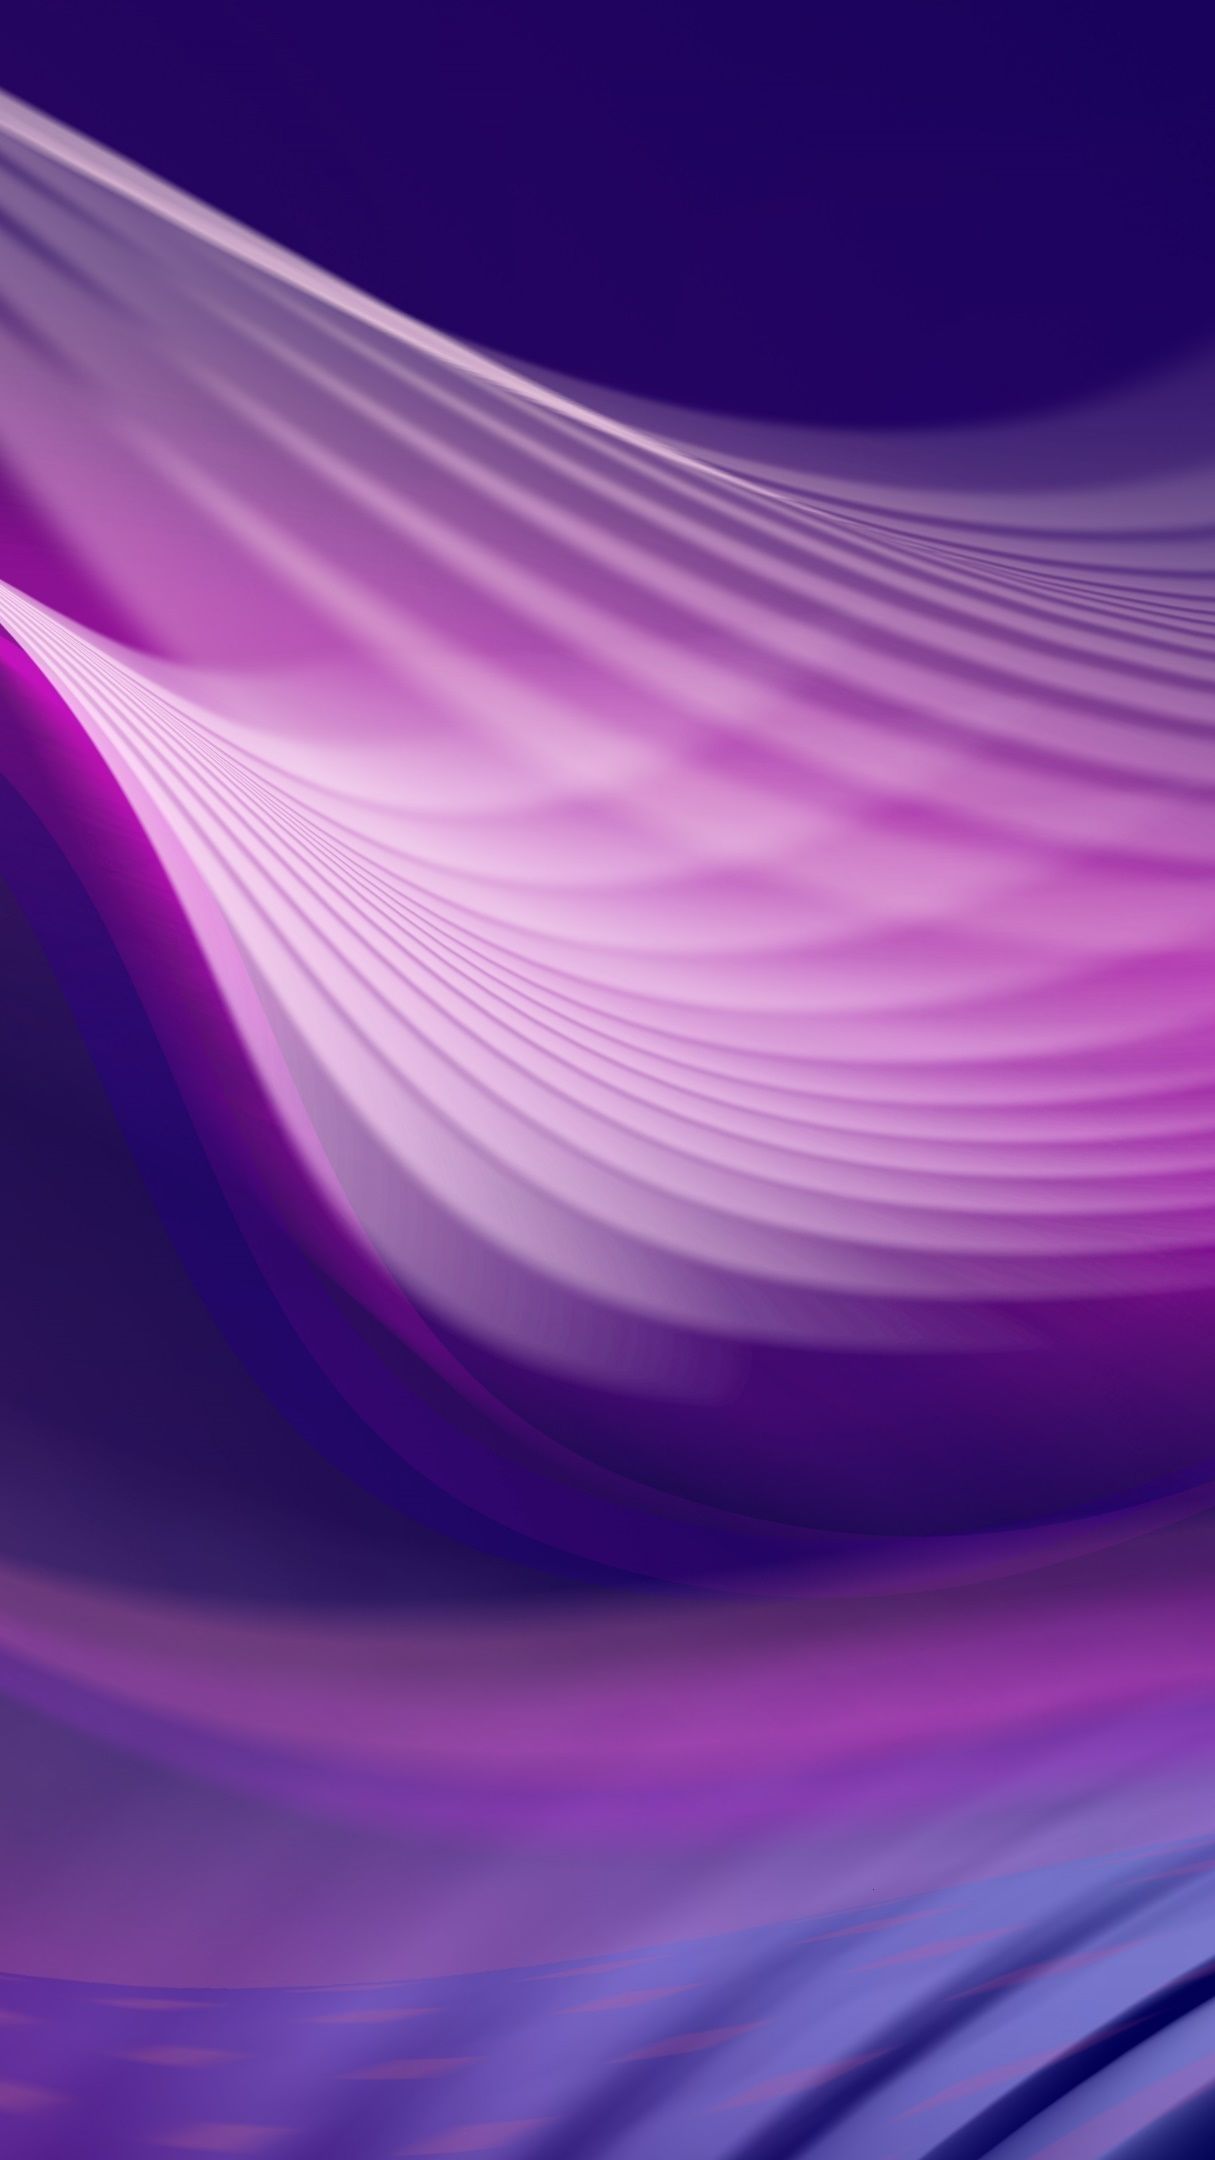 Violet aesthetic Wallpaper Download